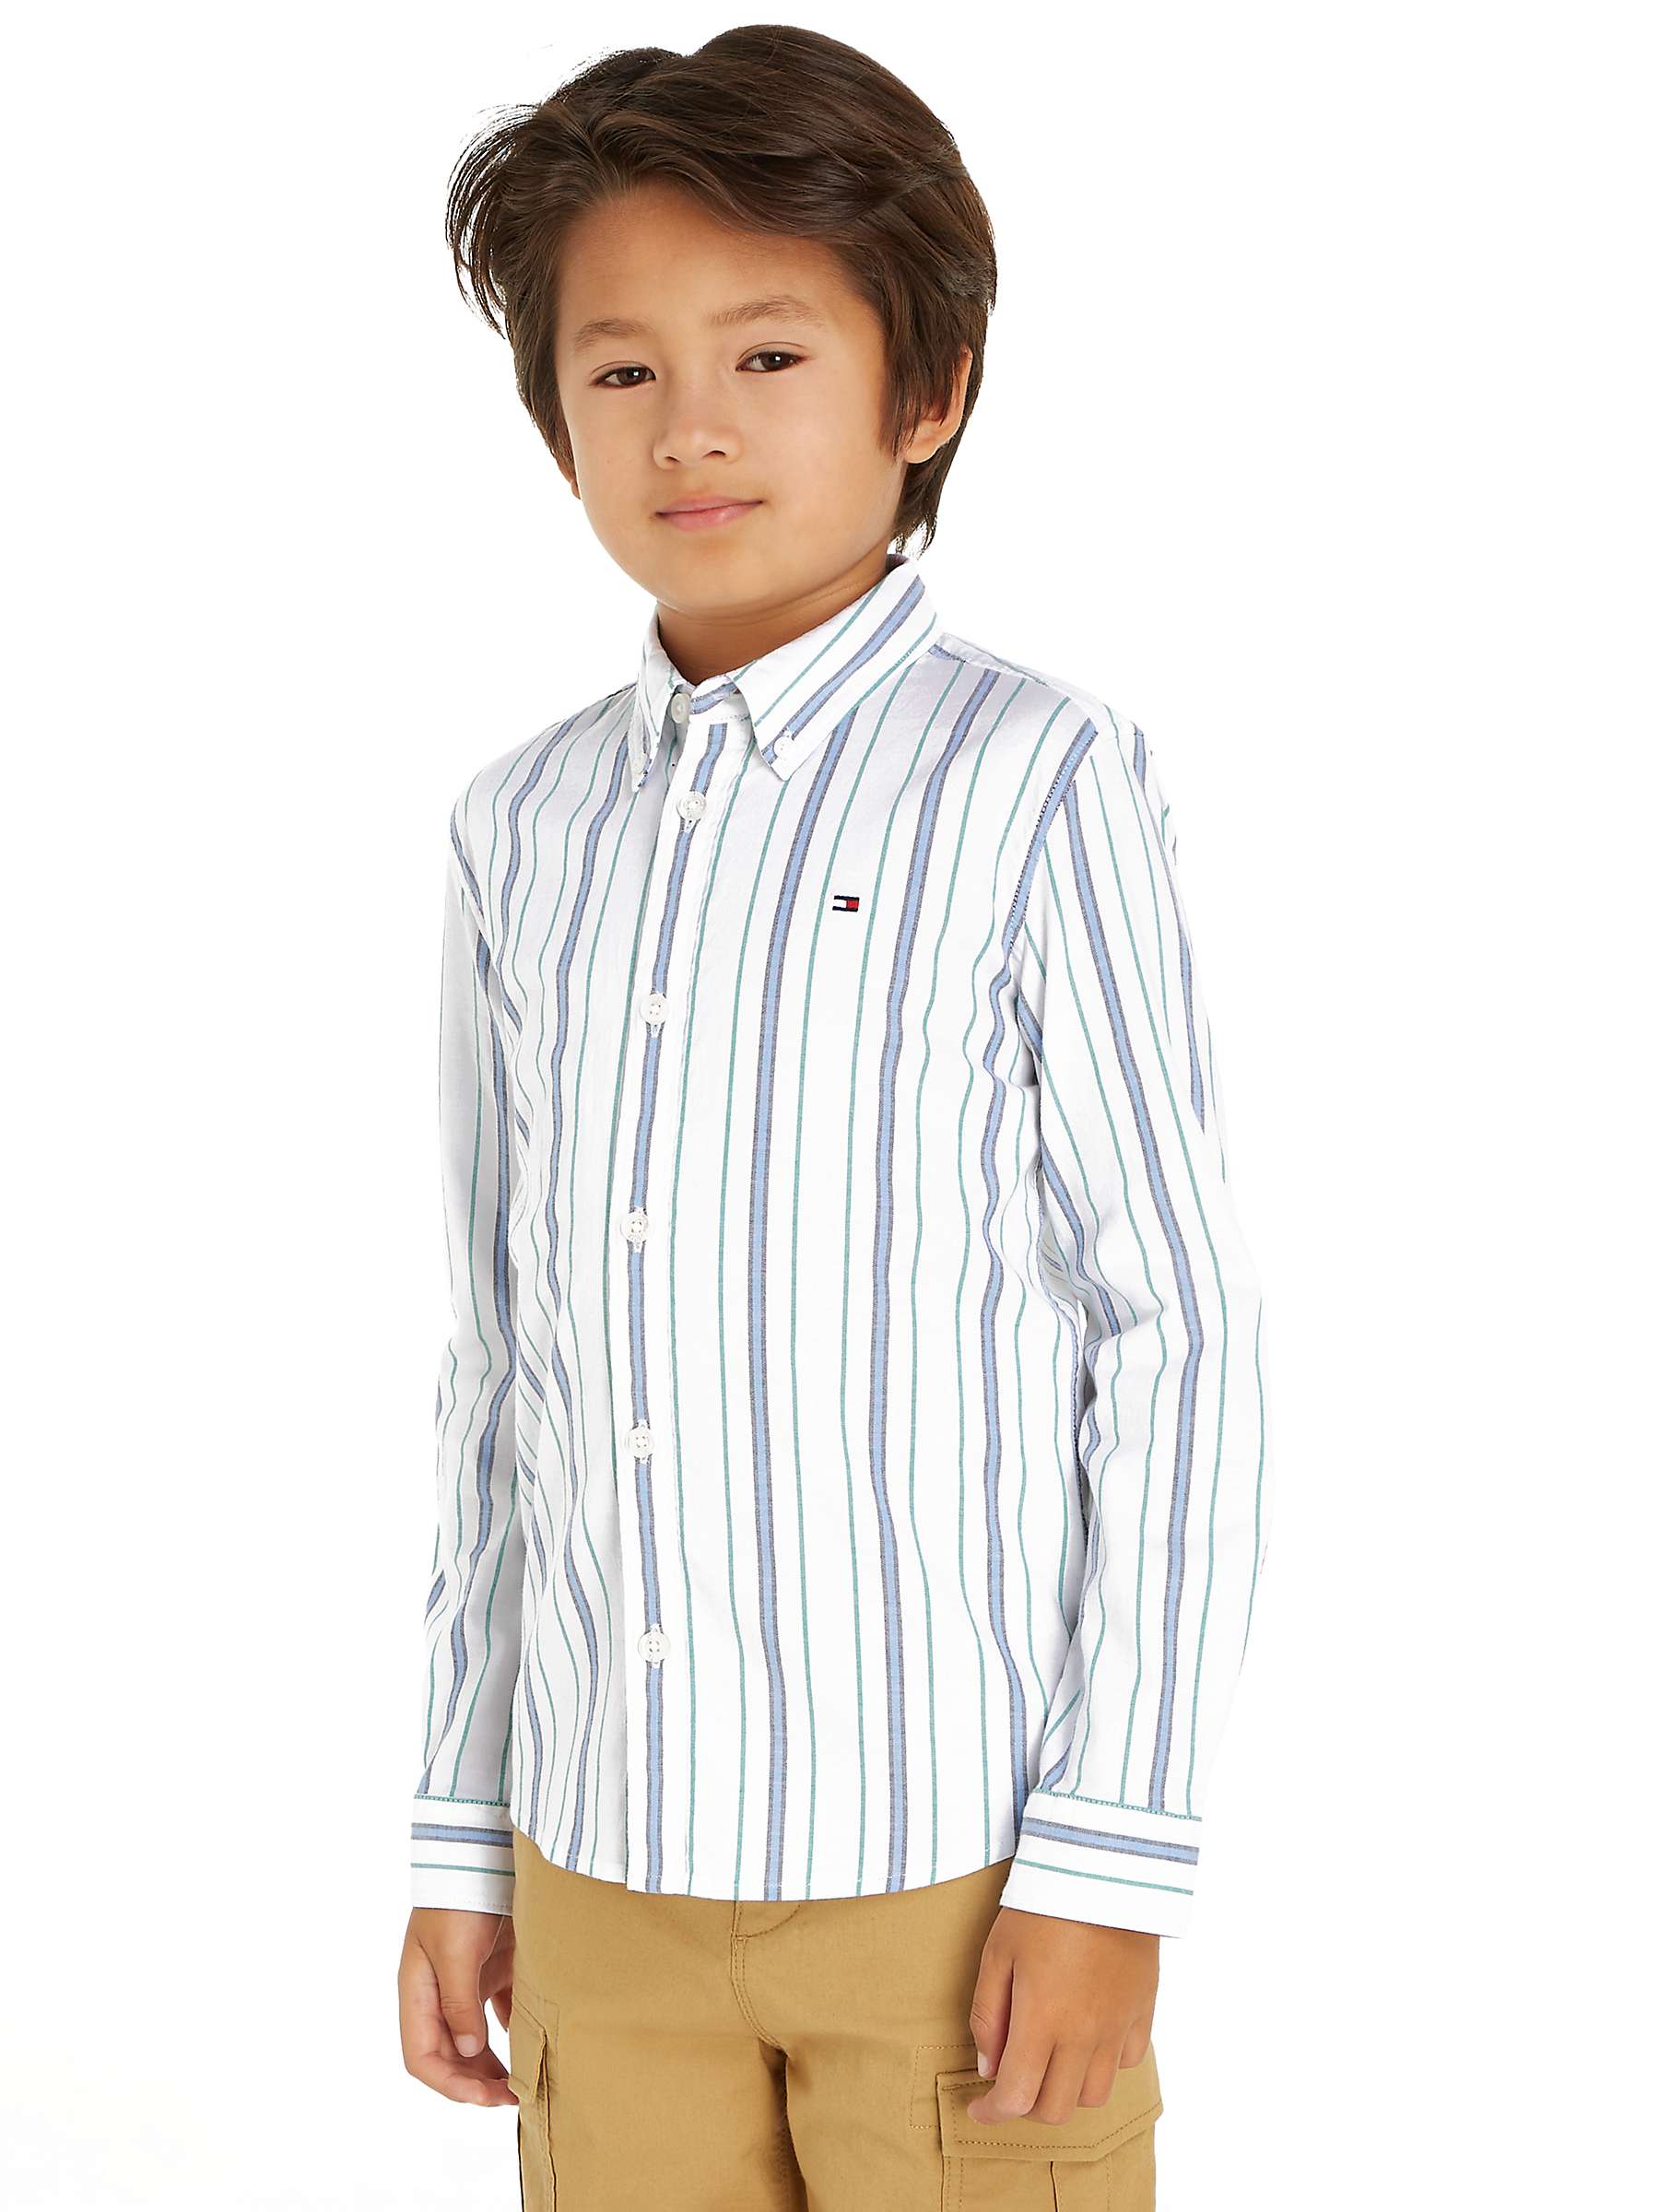 Buy Tommy Hilfiger Kids' Oxford Striped Shirt, Calico/Stripe Online at johnlewis.com